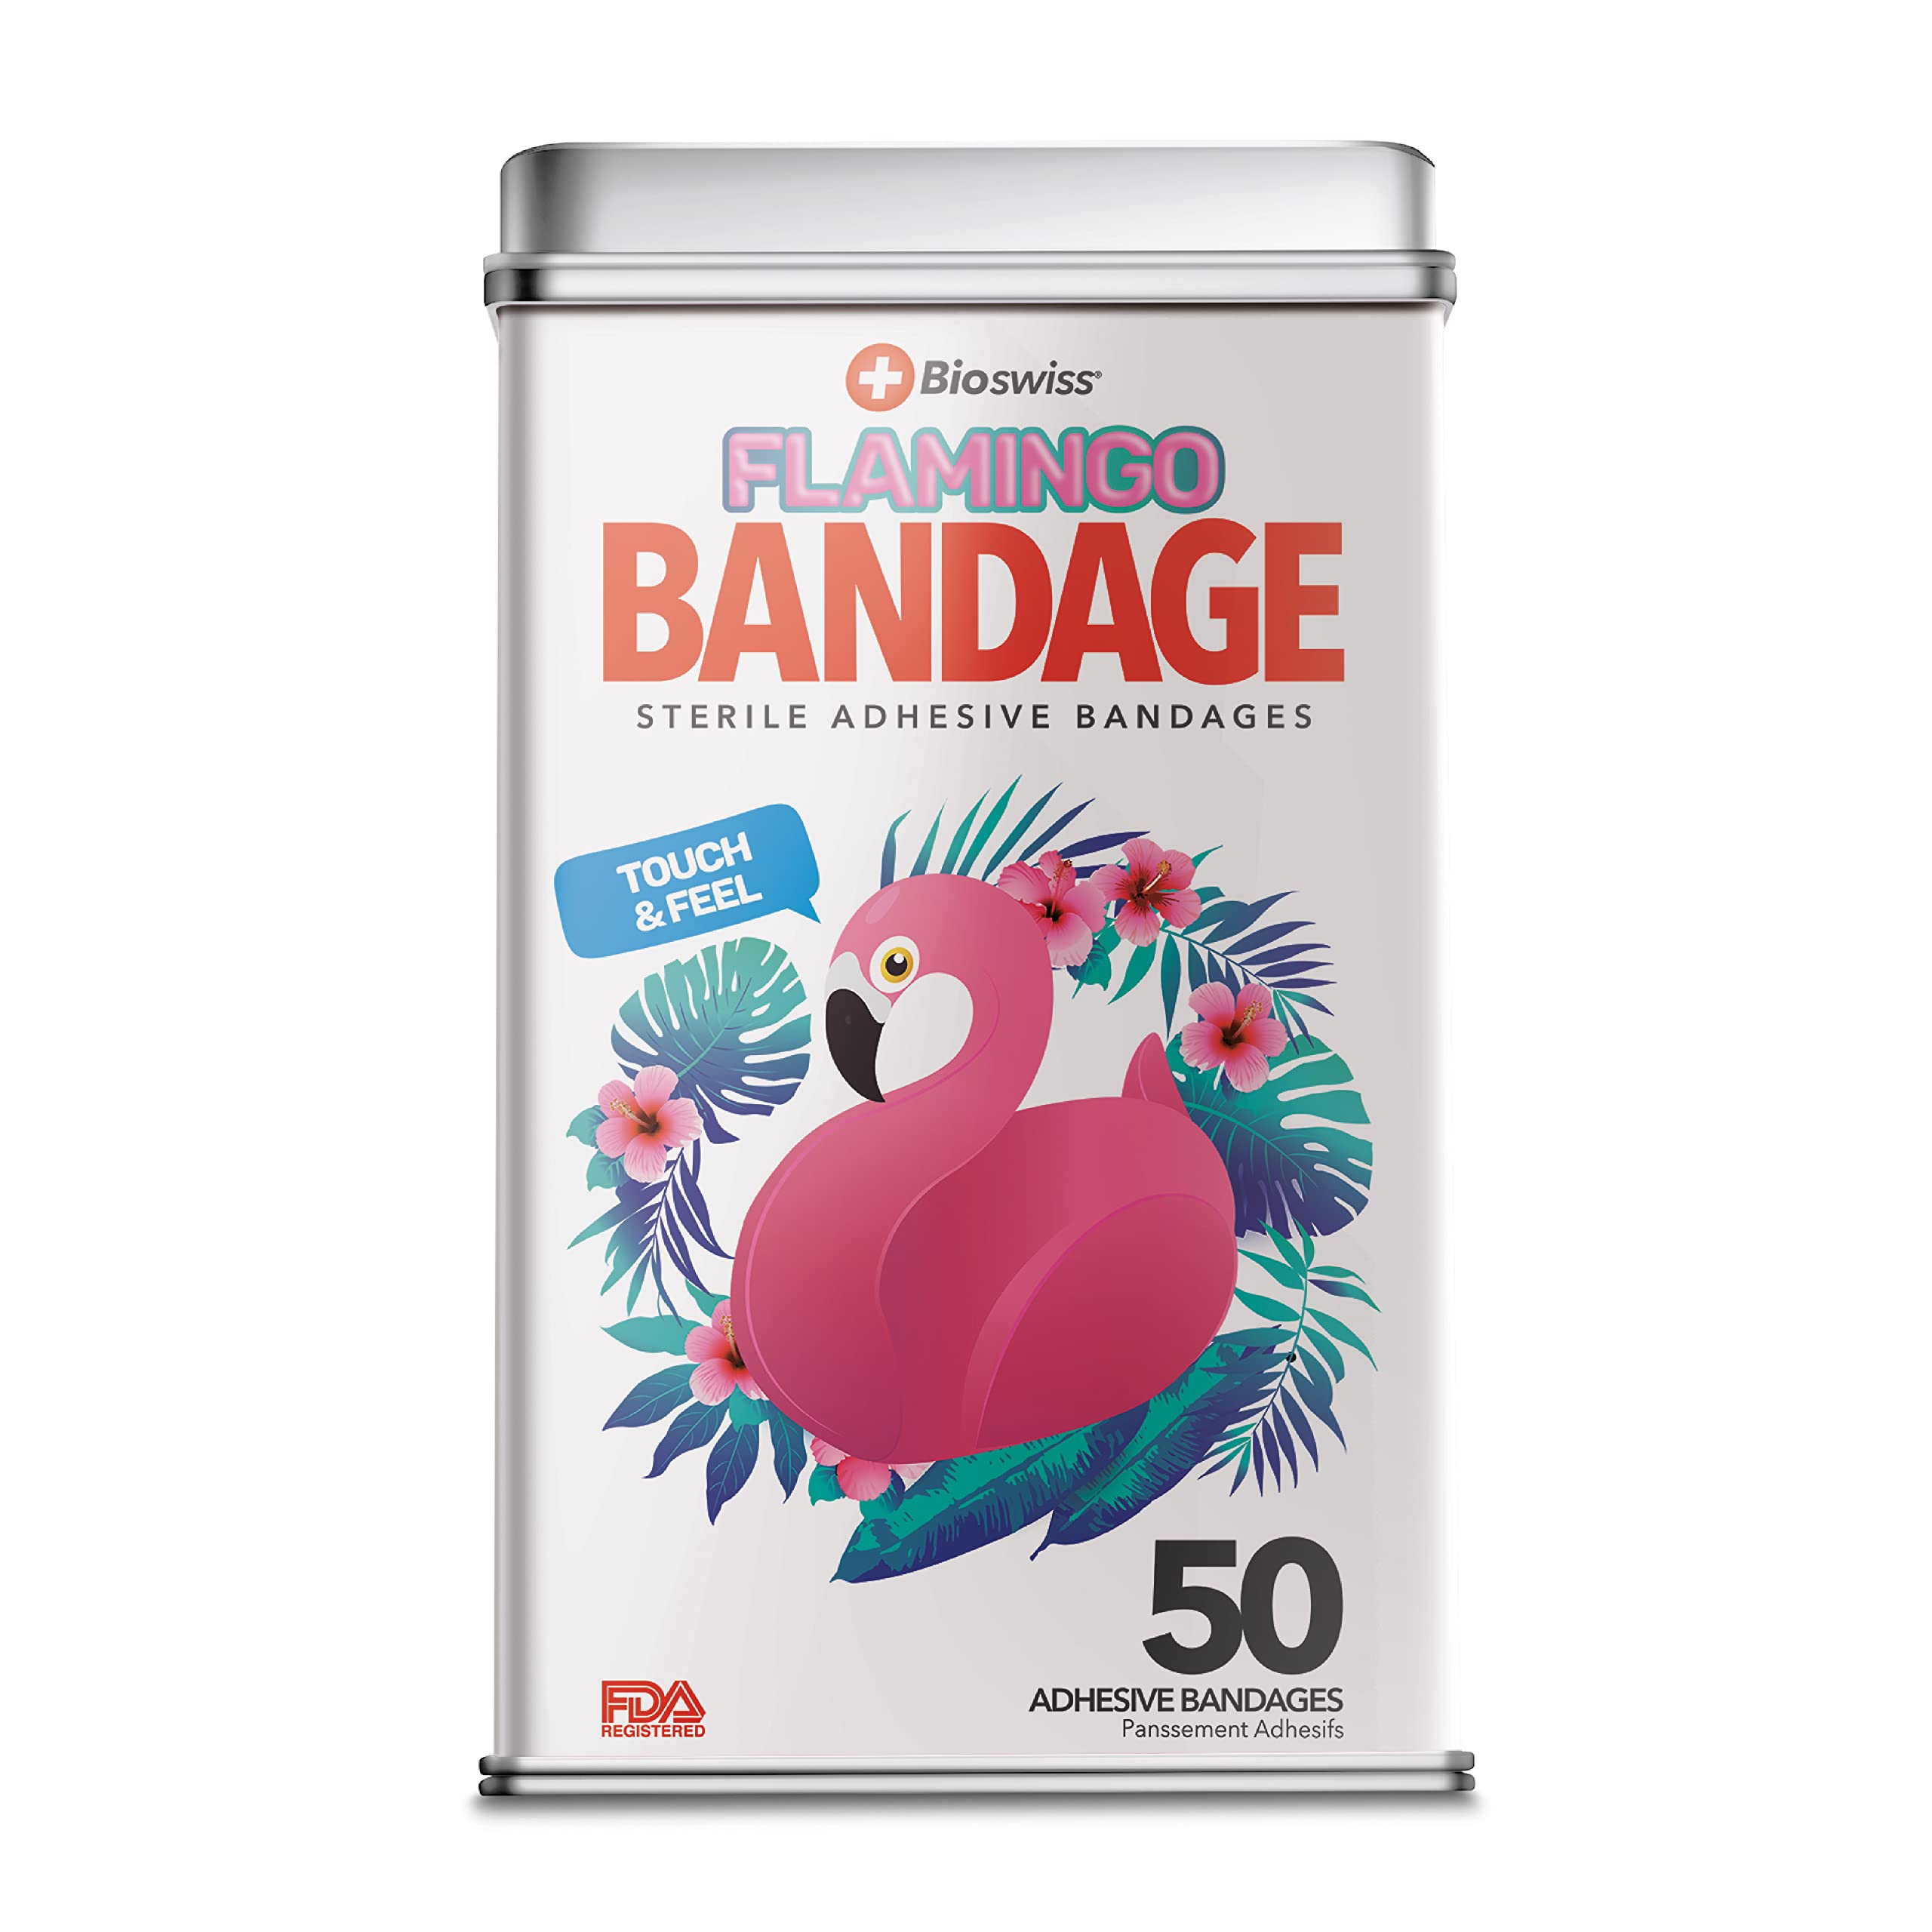 BioSwiss Bandages, Flamingo Shaped Self Adhesive Bandage, Latex Free Sterile Wound Care, 50 Count